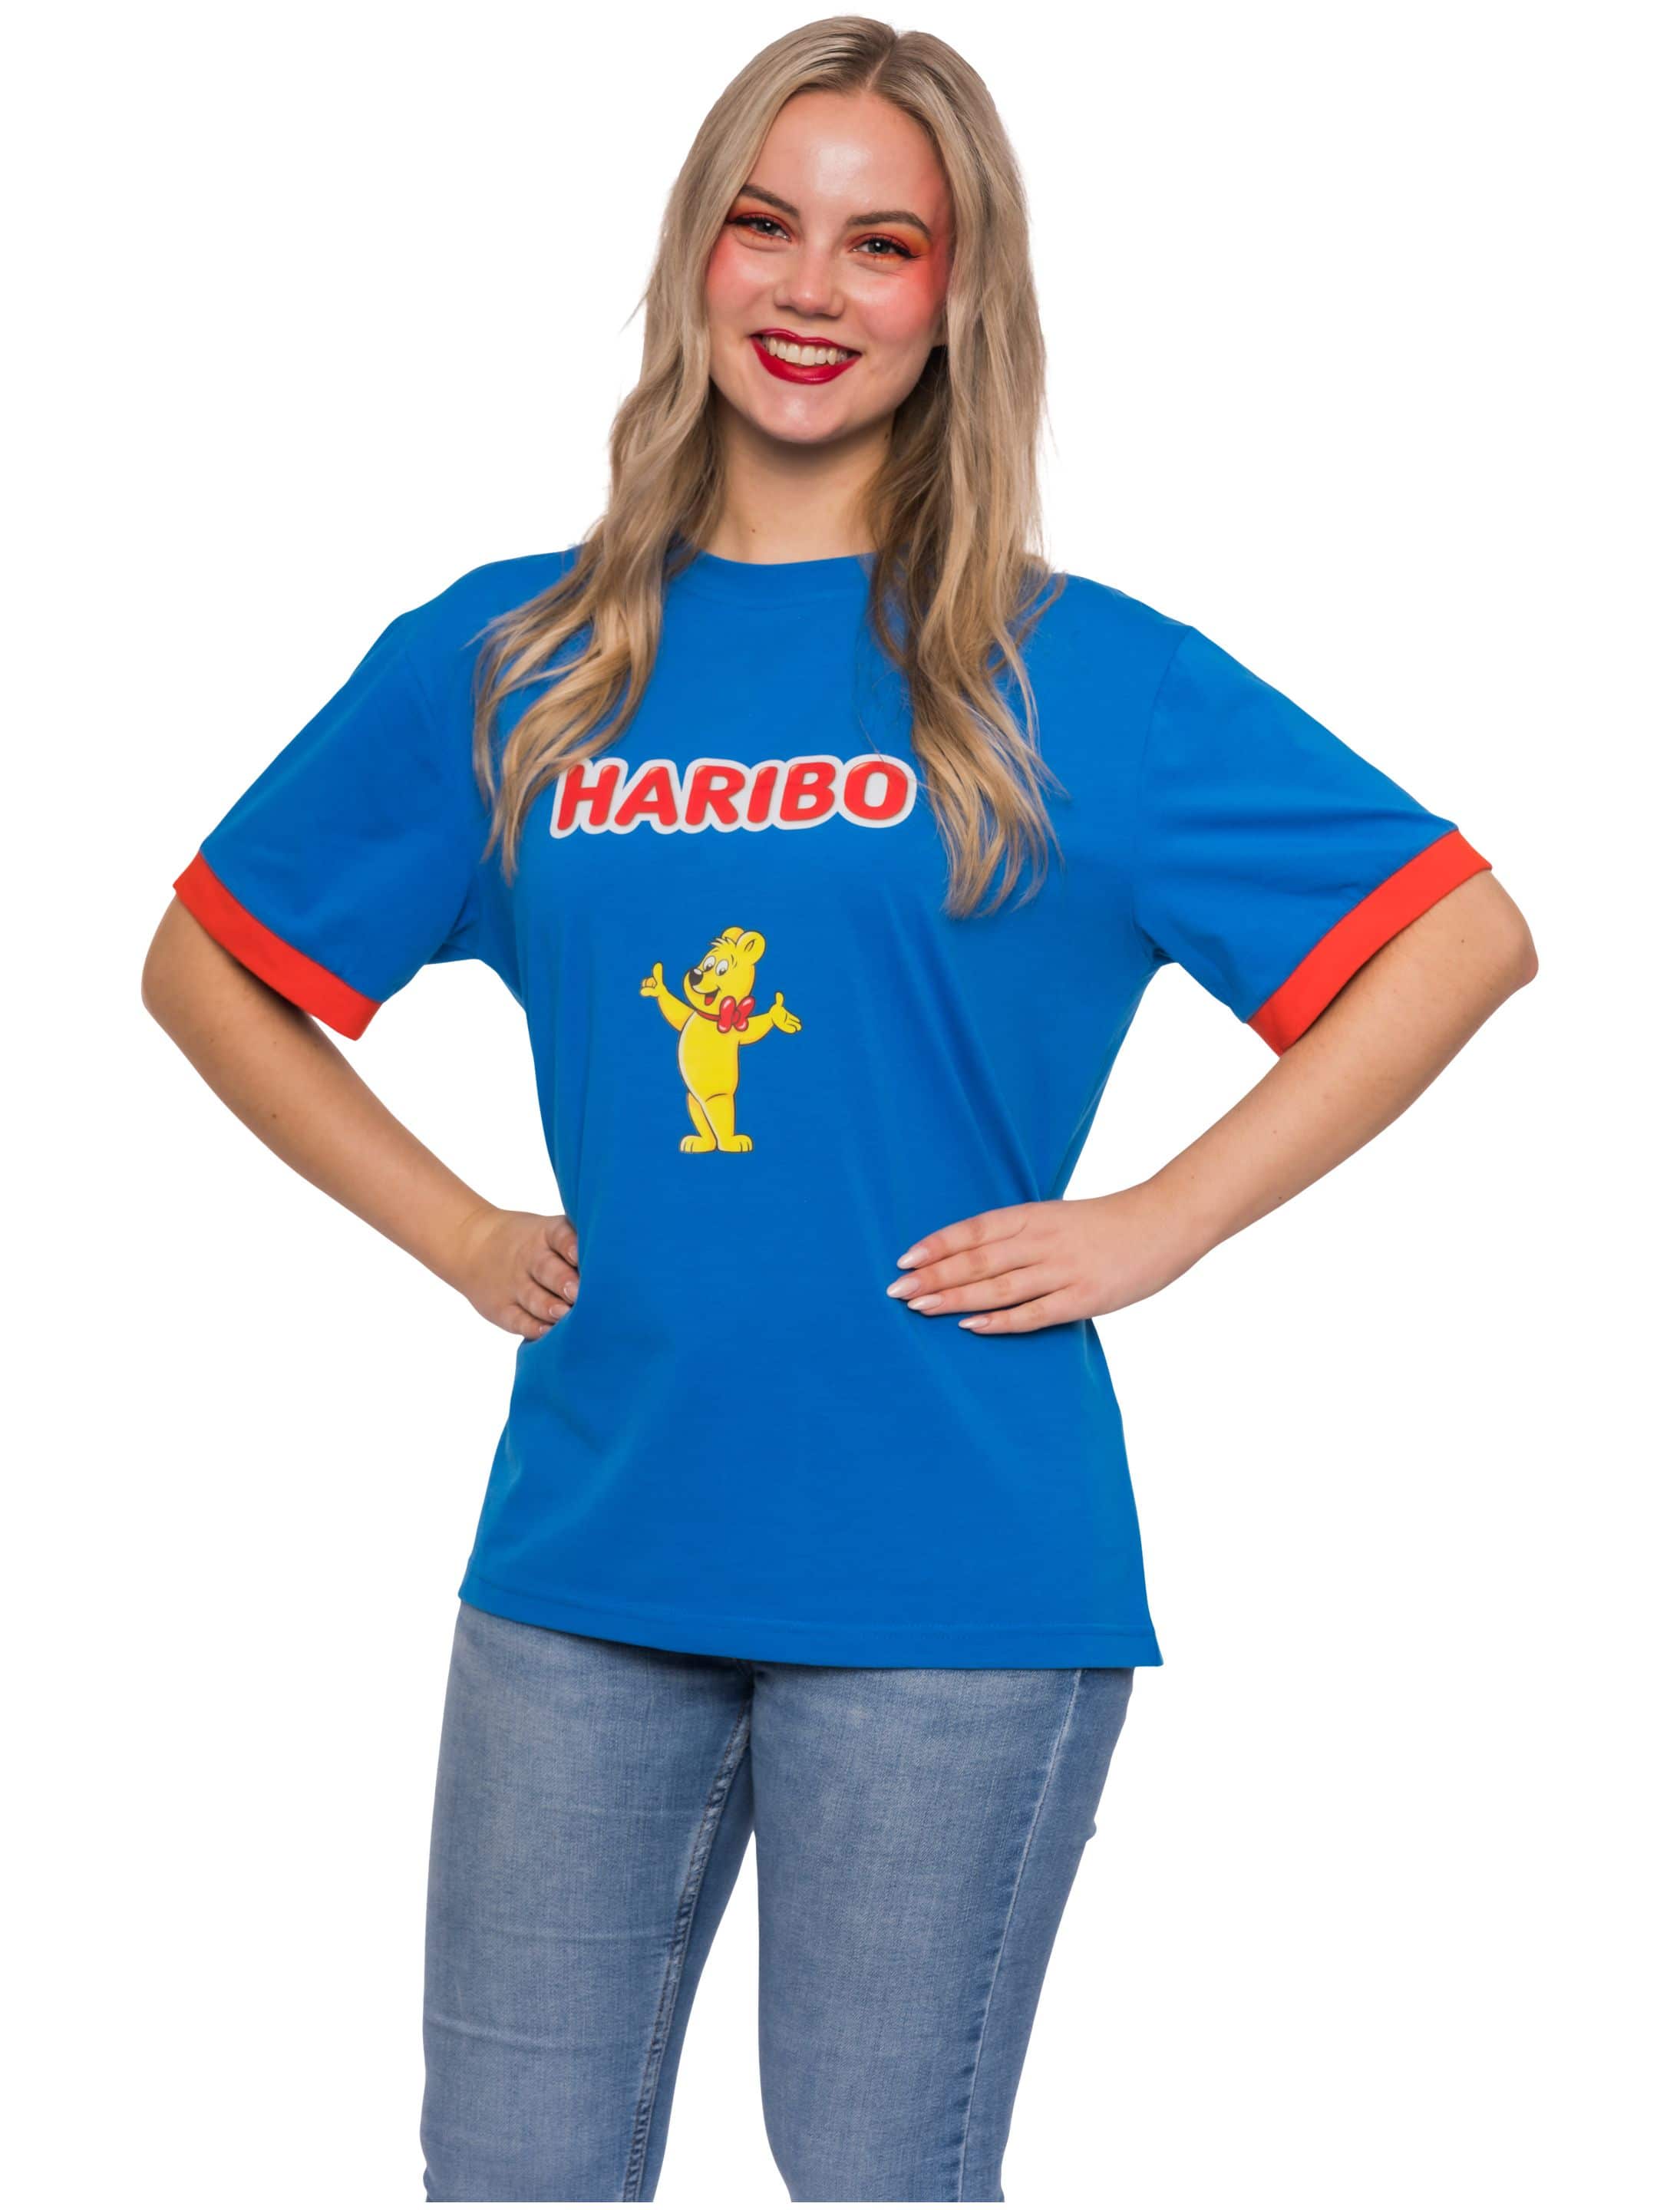 T-Shirt HARIBO Goldbären blau S